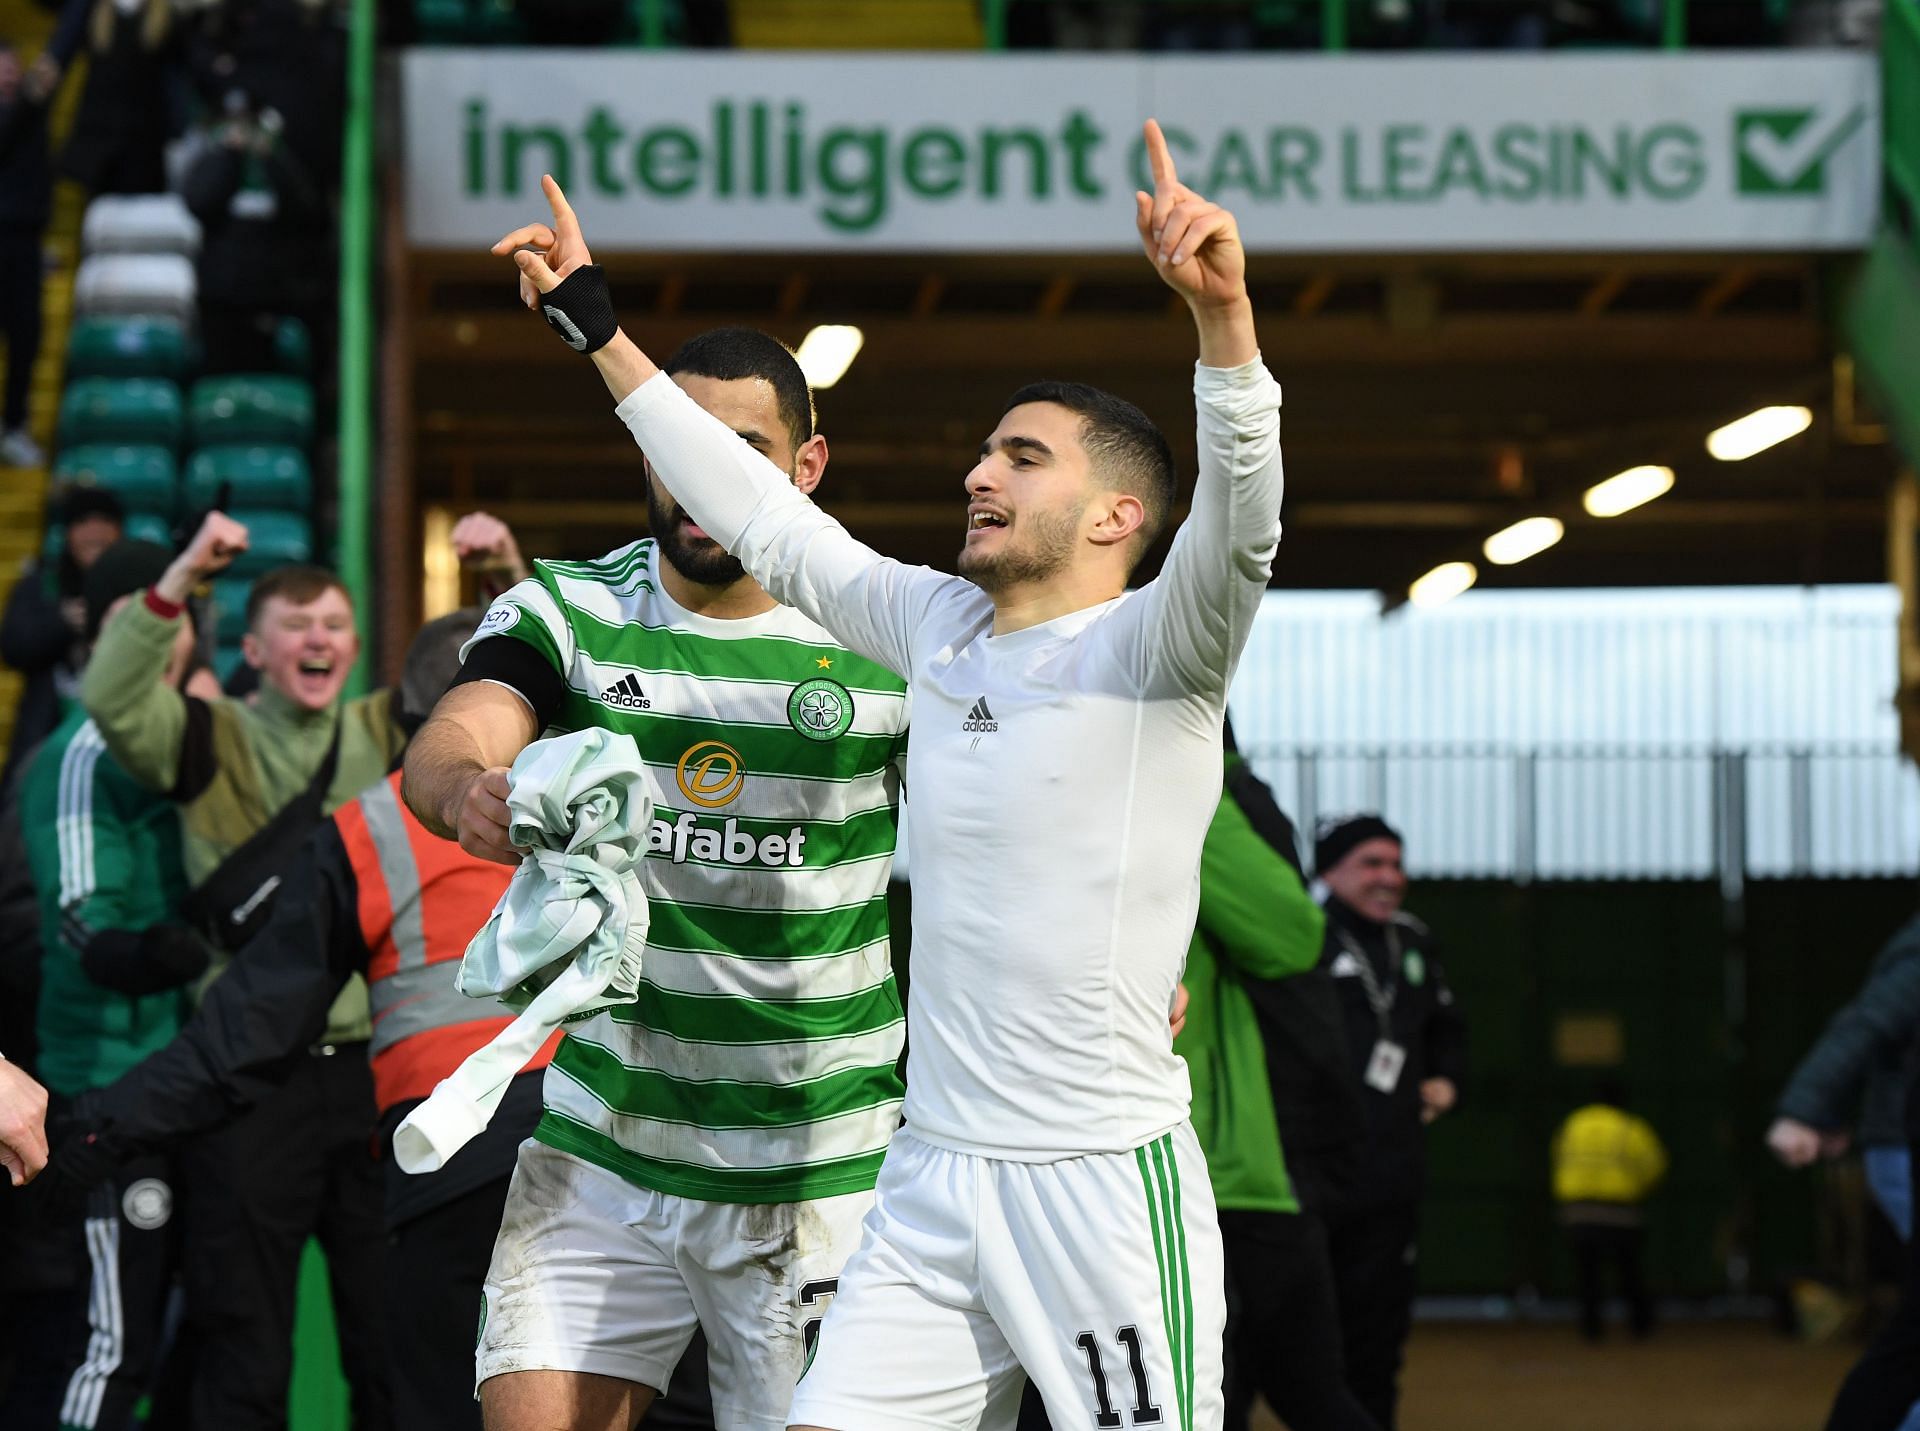 Celtic will face Livingston on Sunday